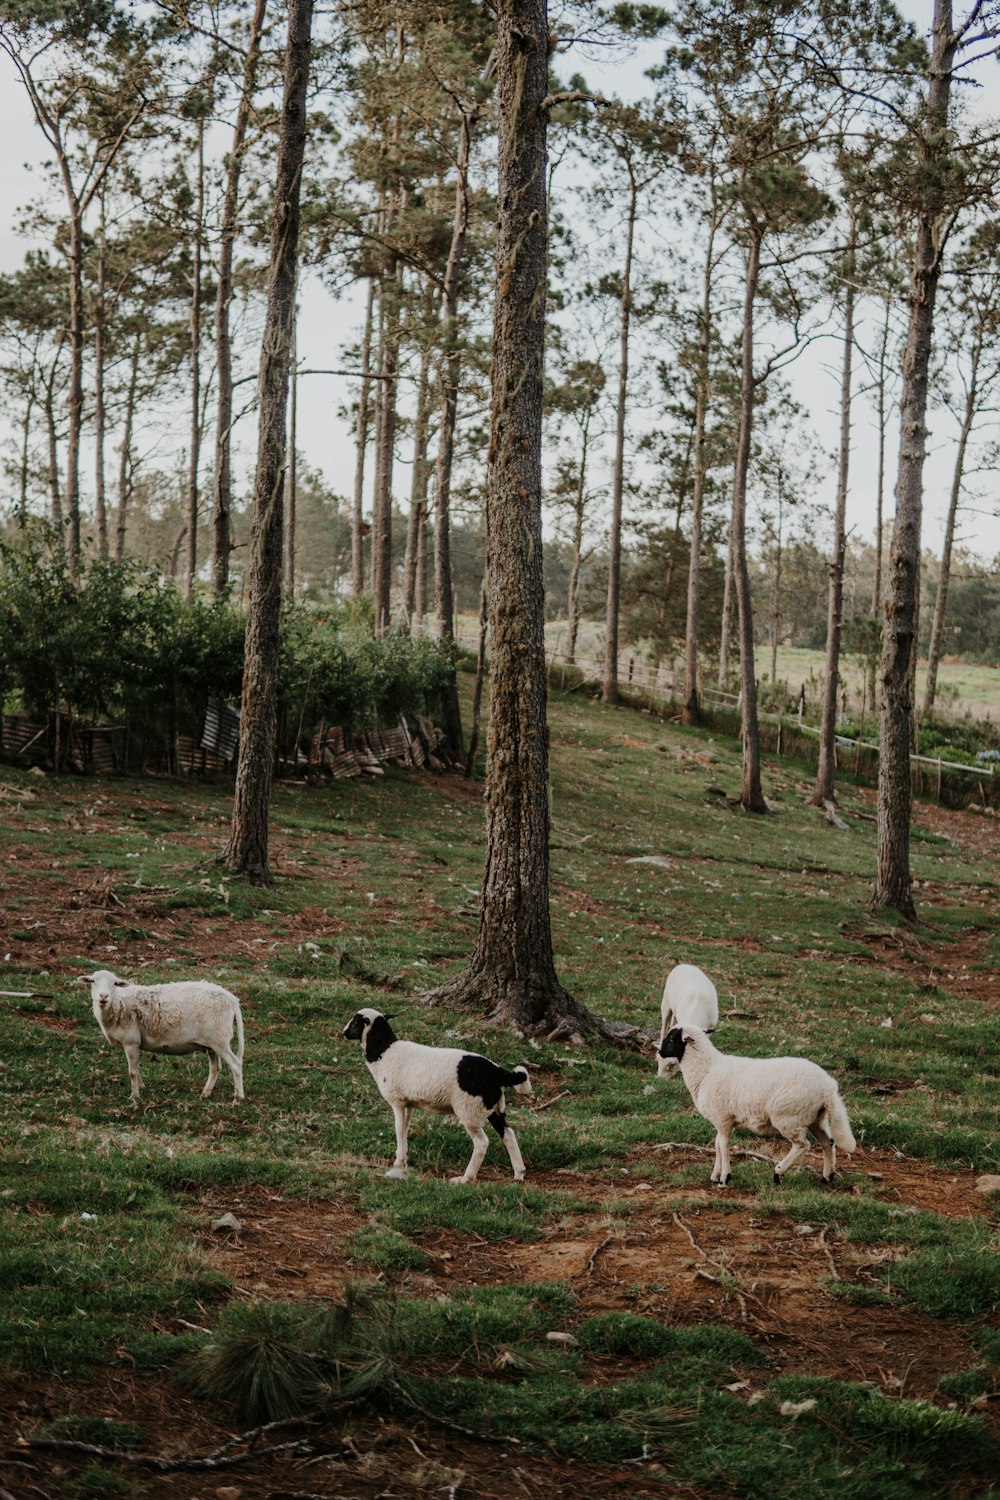 cabras brancas e pretas no campo de grama verde